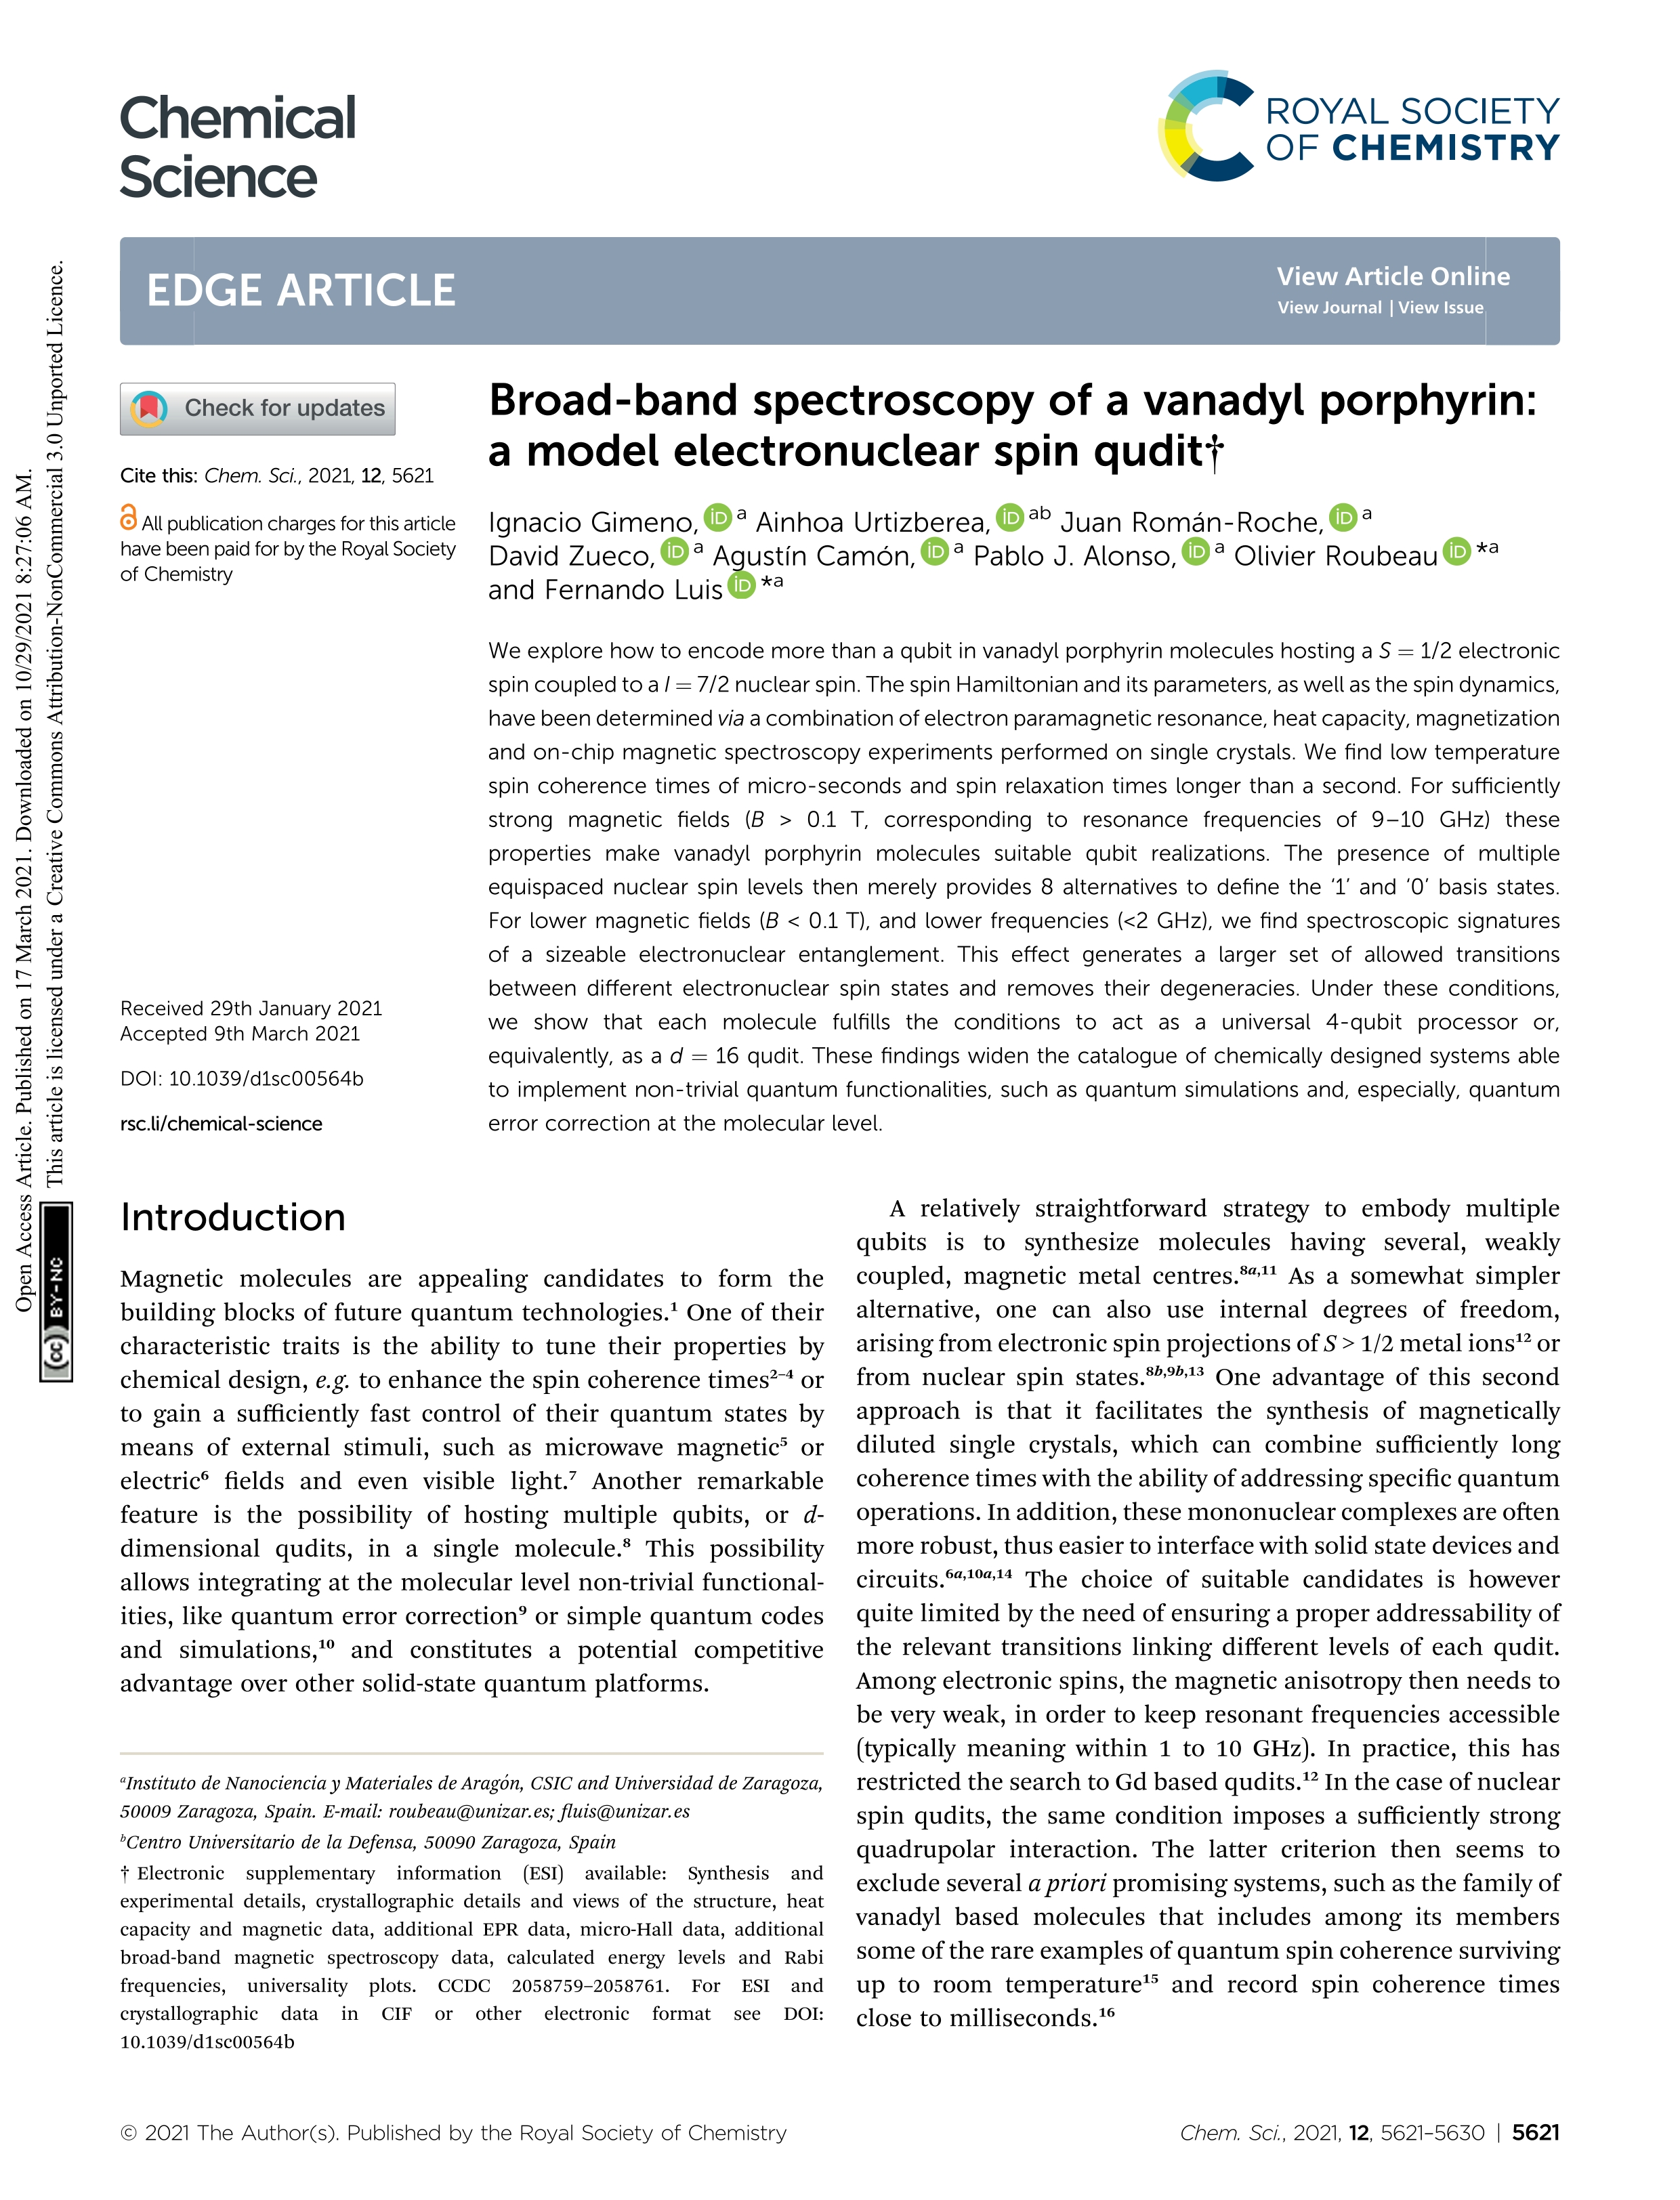 Broad-band spectroscopy of a vanadyl porphyrin: a model electronuclear spin qudit